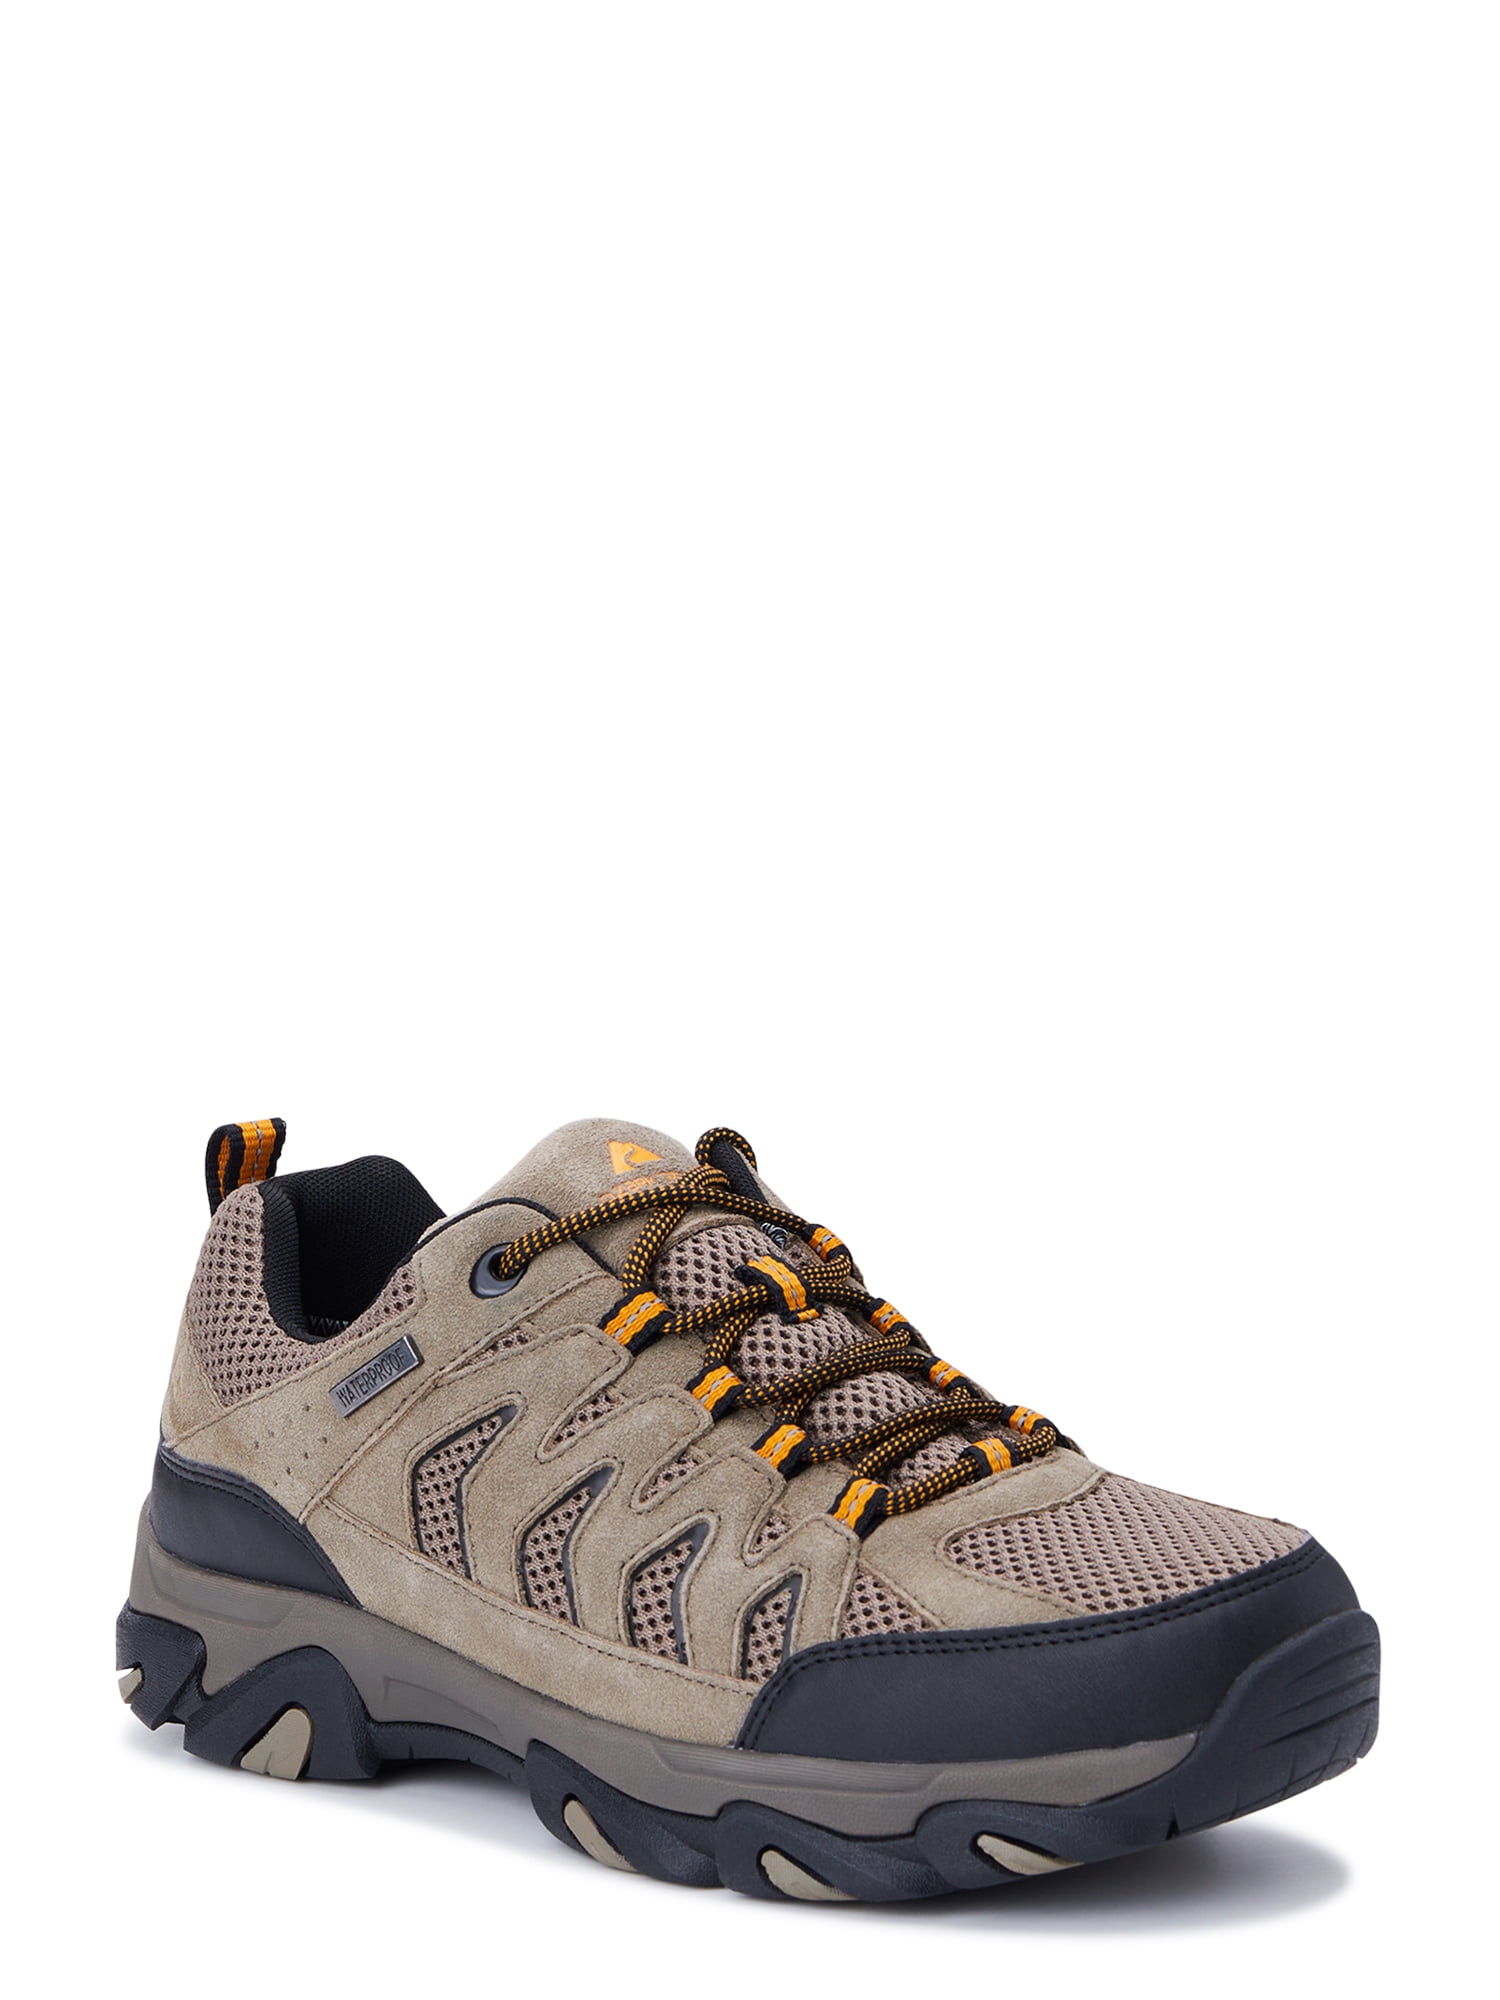 Ozark Trail Men’s Lightweight Hiking Shoes - Walmart.com